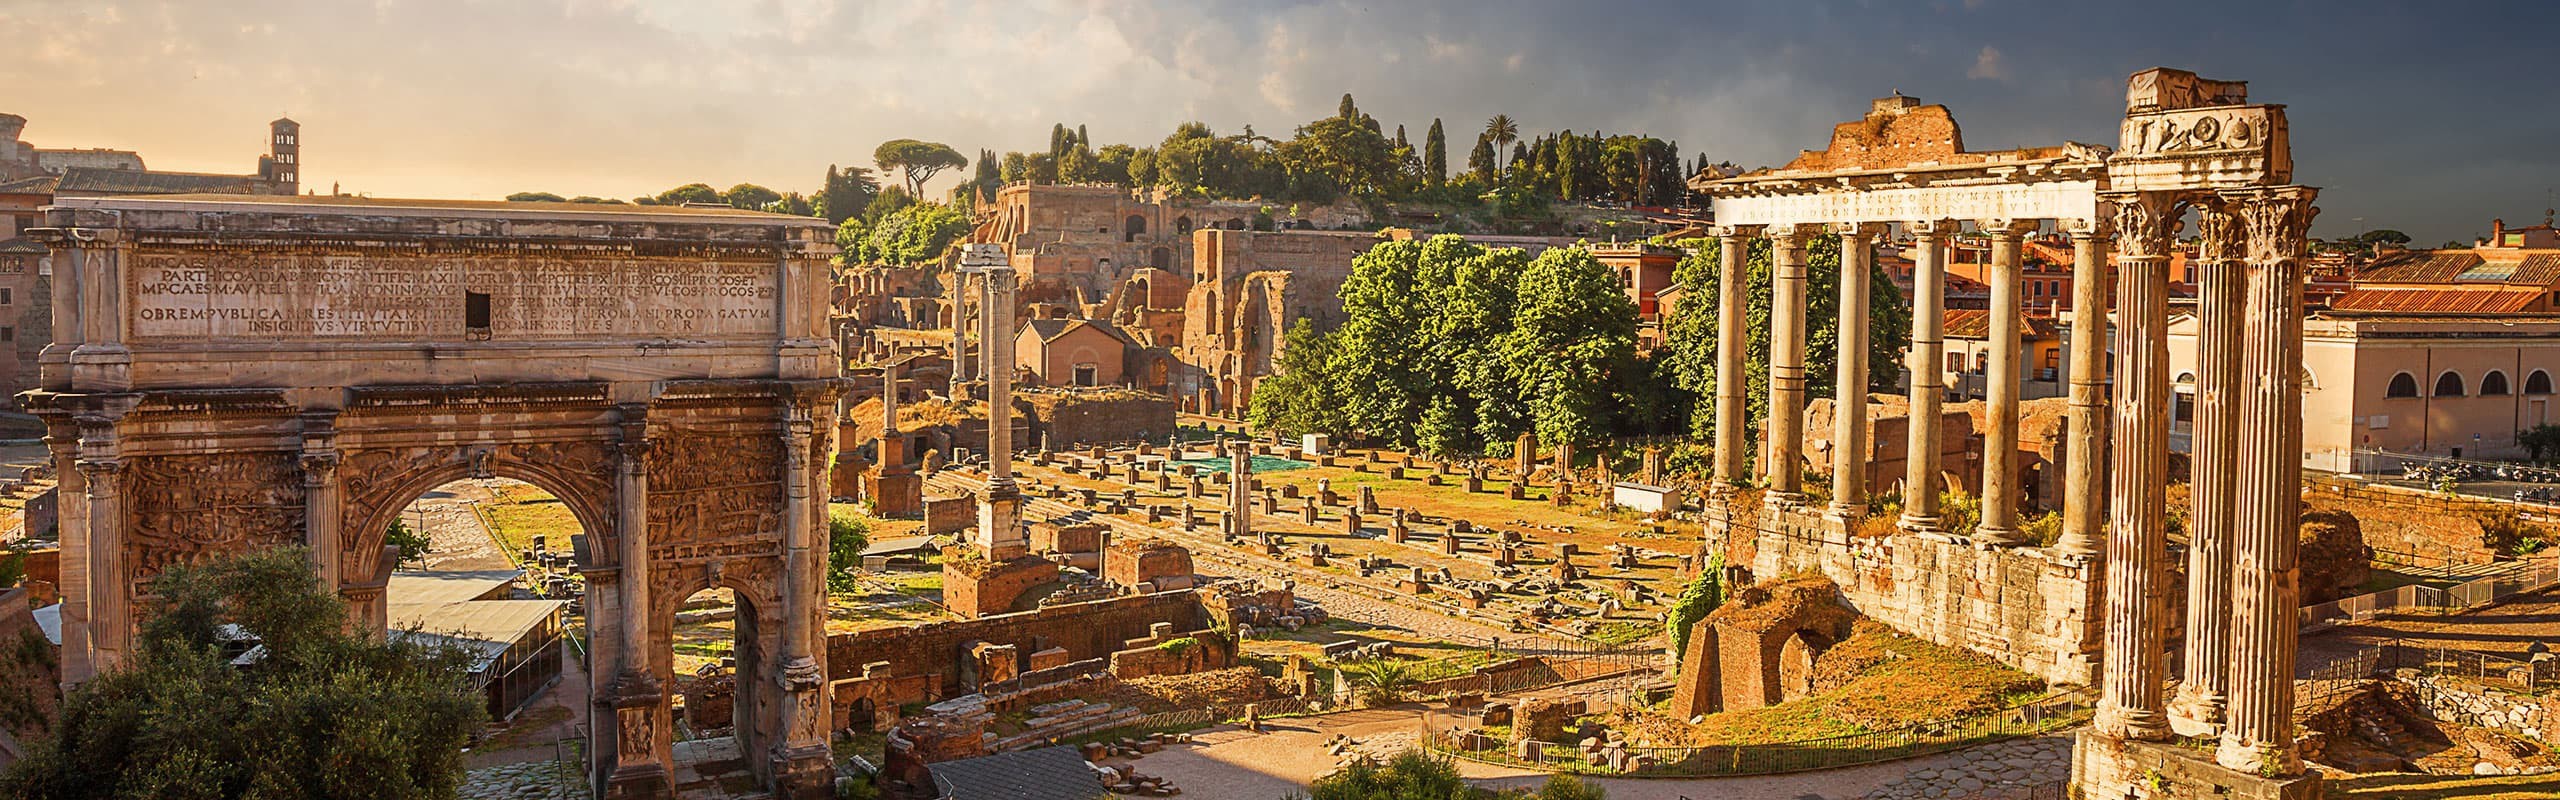 Colosseum Tickets - Roman Forum & Colosseum Pass - Select Italy